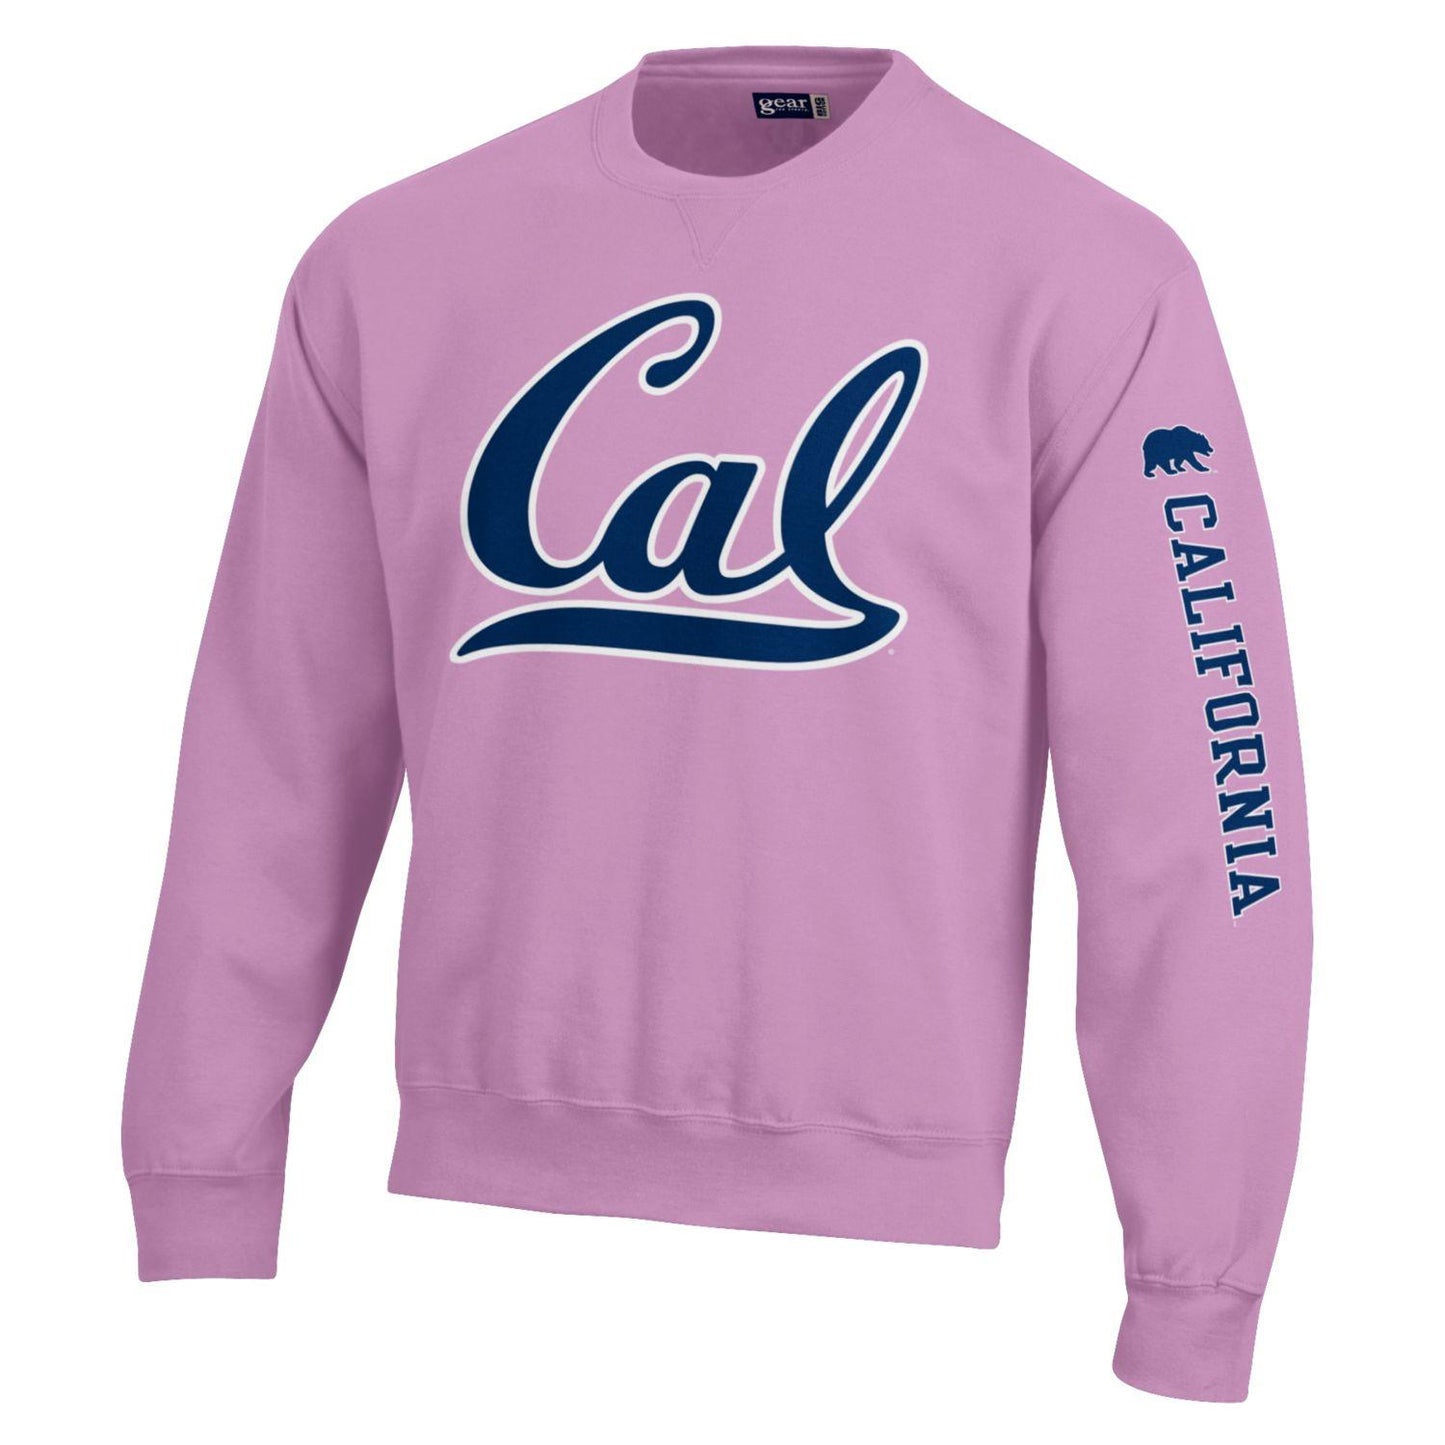 U.C. Berkeley bold Cal rich cotton crew-neck sweatshirt-Lavender-Shop College Wear